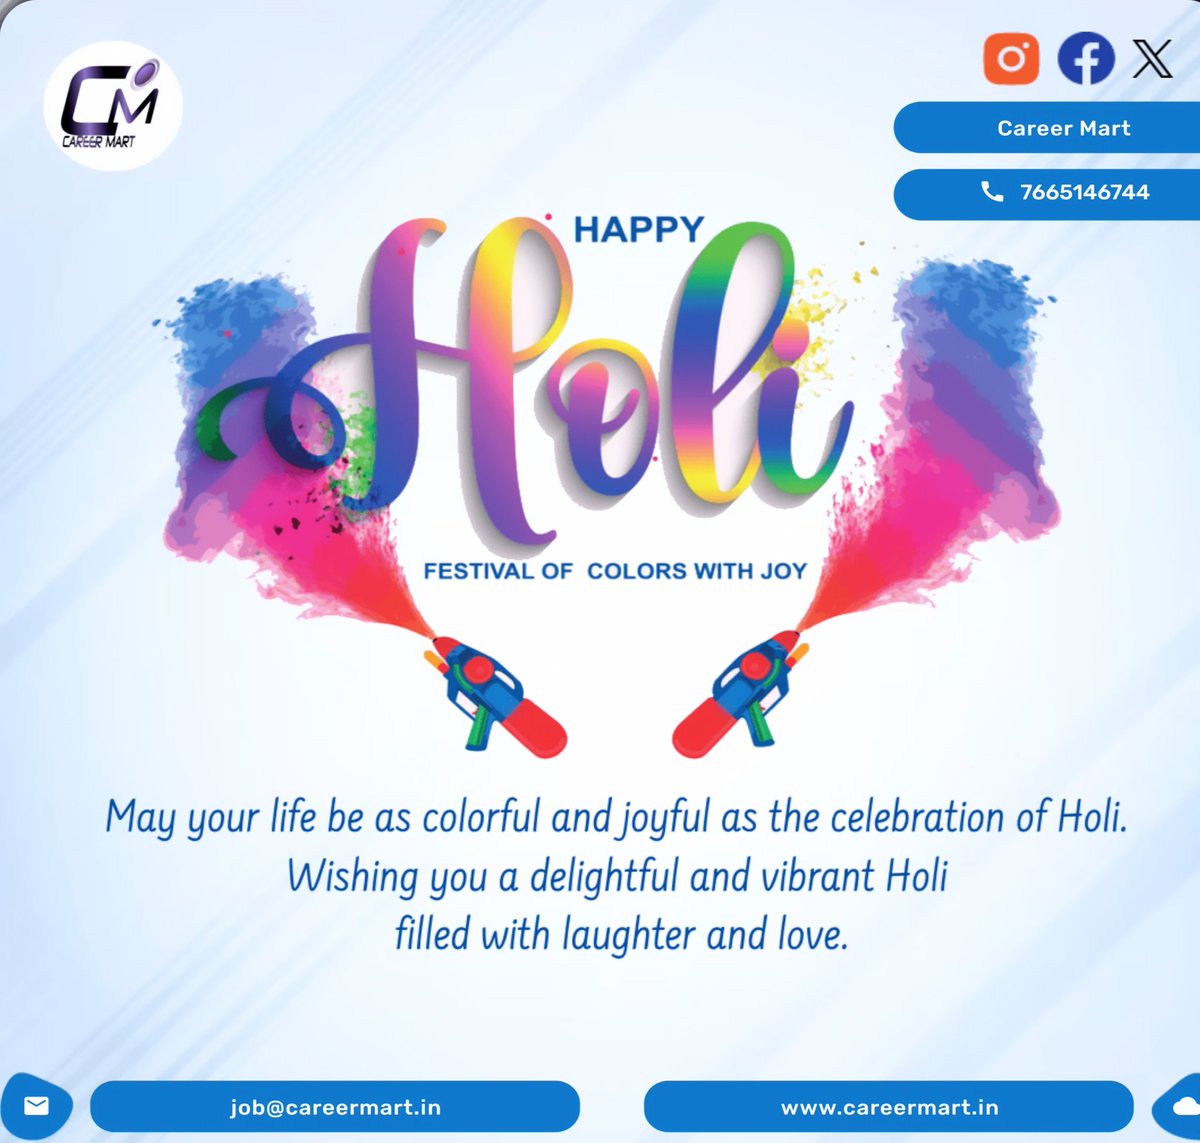 🥳 Wishing you a colorful and joyful Holi! 🎨

#holi #happyholi #holifestival #india #festival #holihai #festivalofcolours